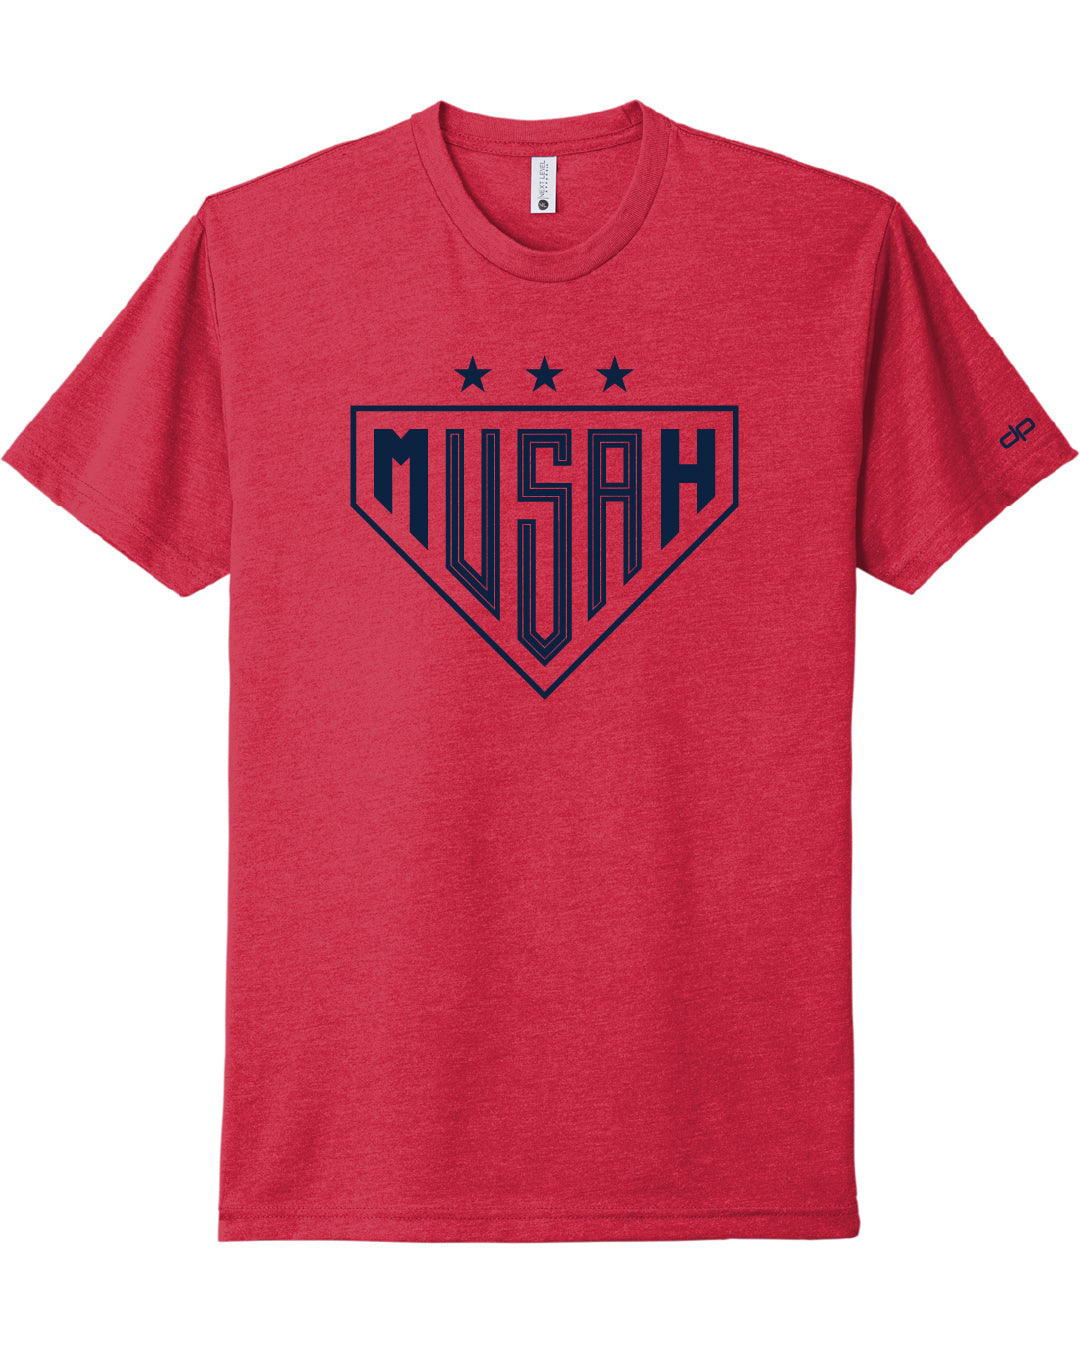 Musah Soccer T-Shirt